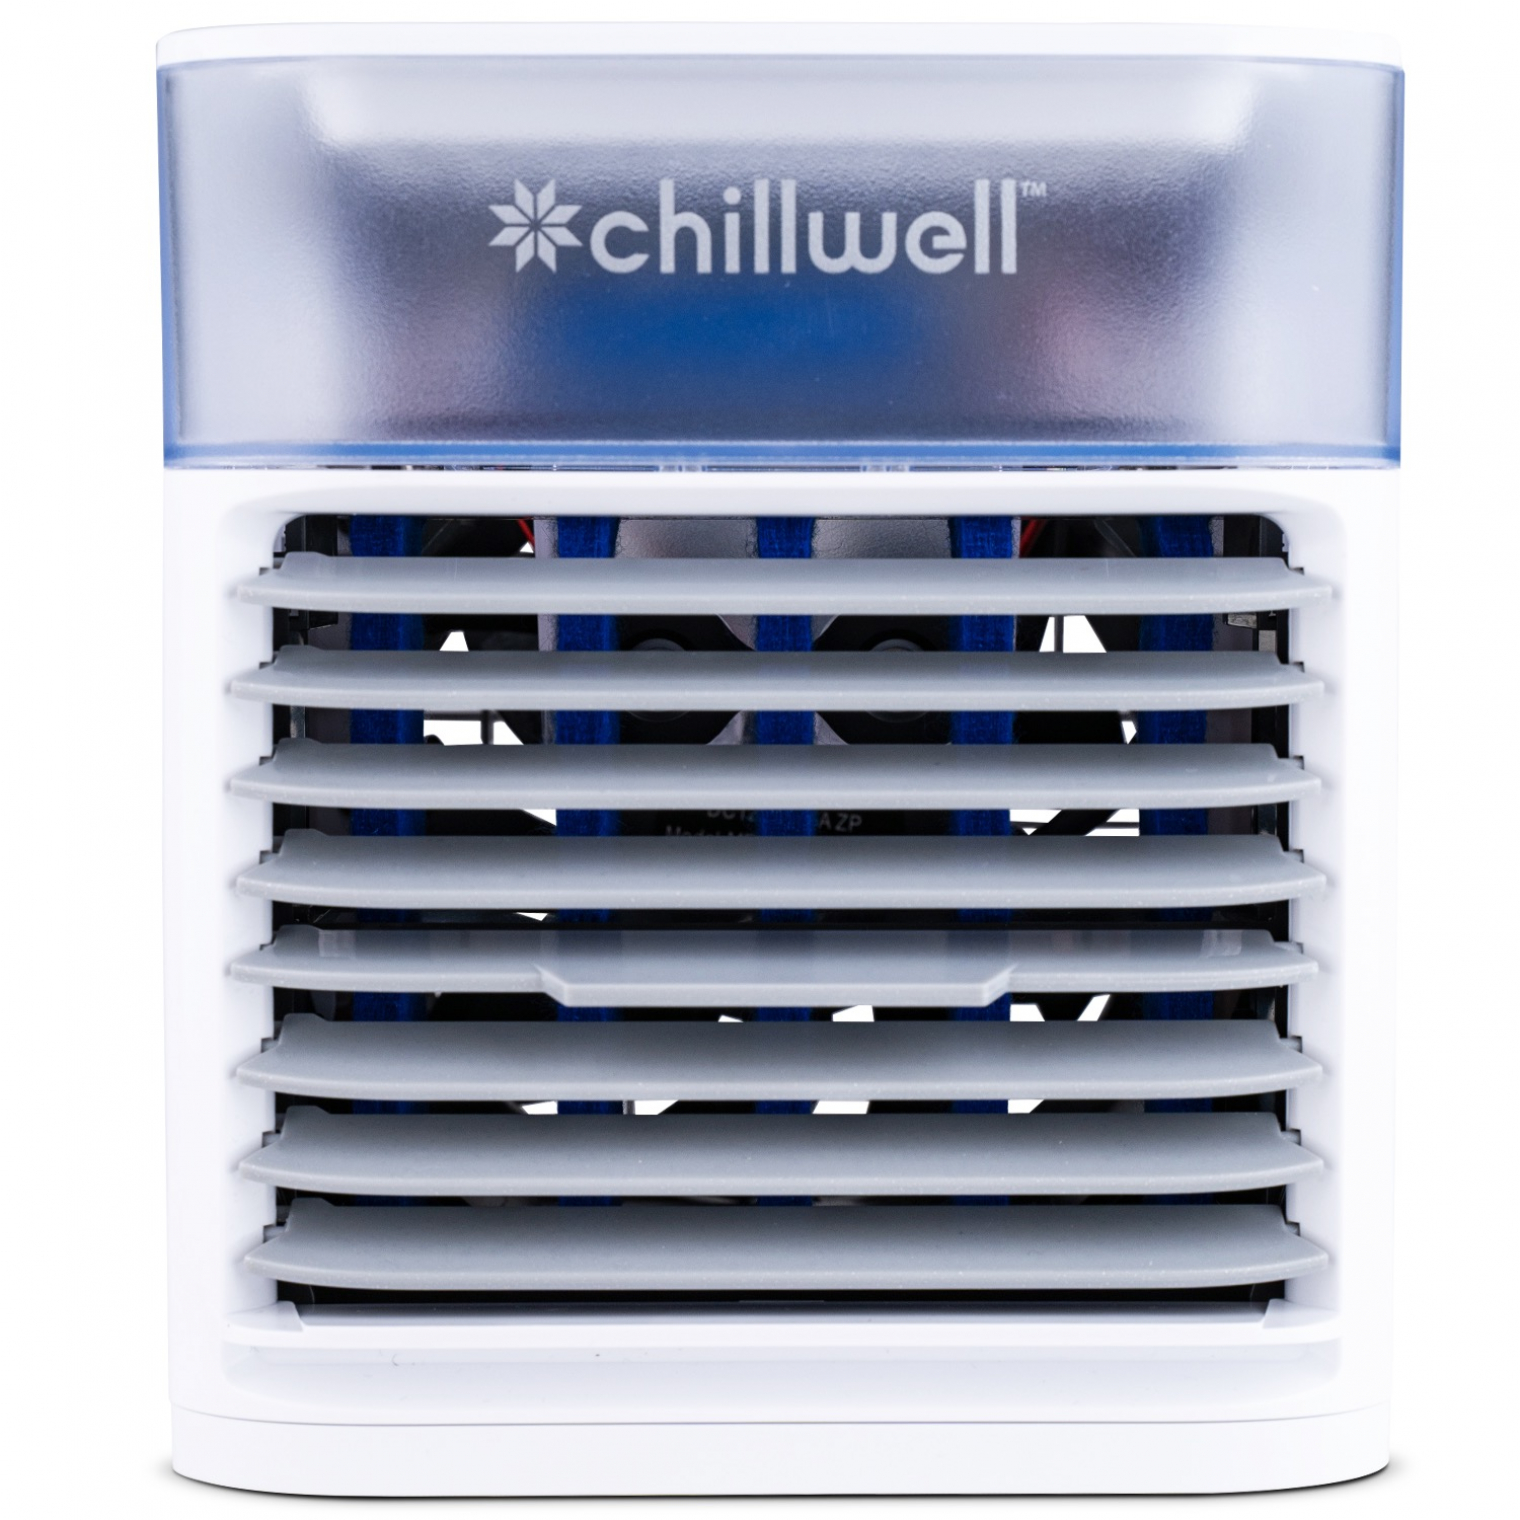 Blast Chillwell AC Conditioner